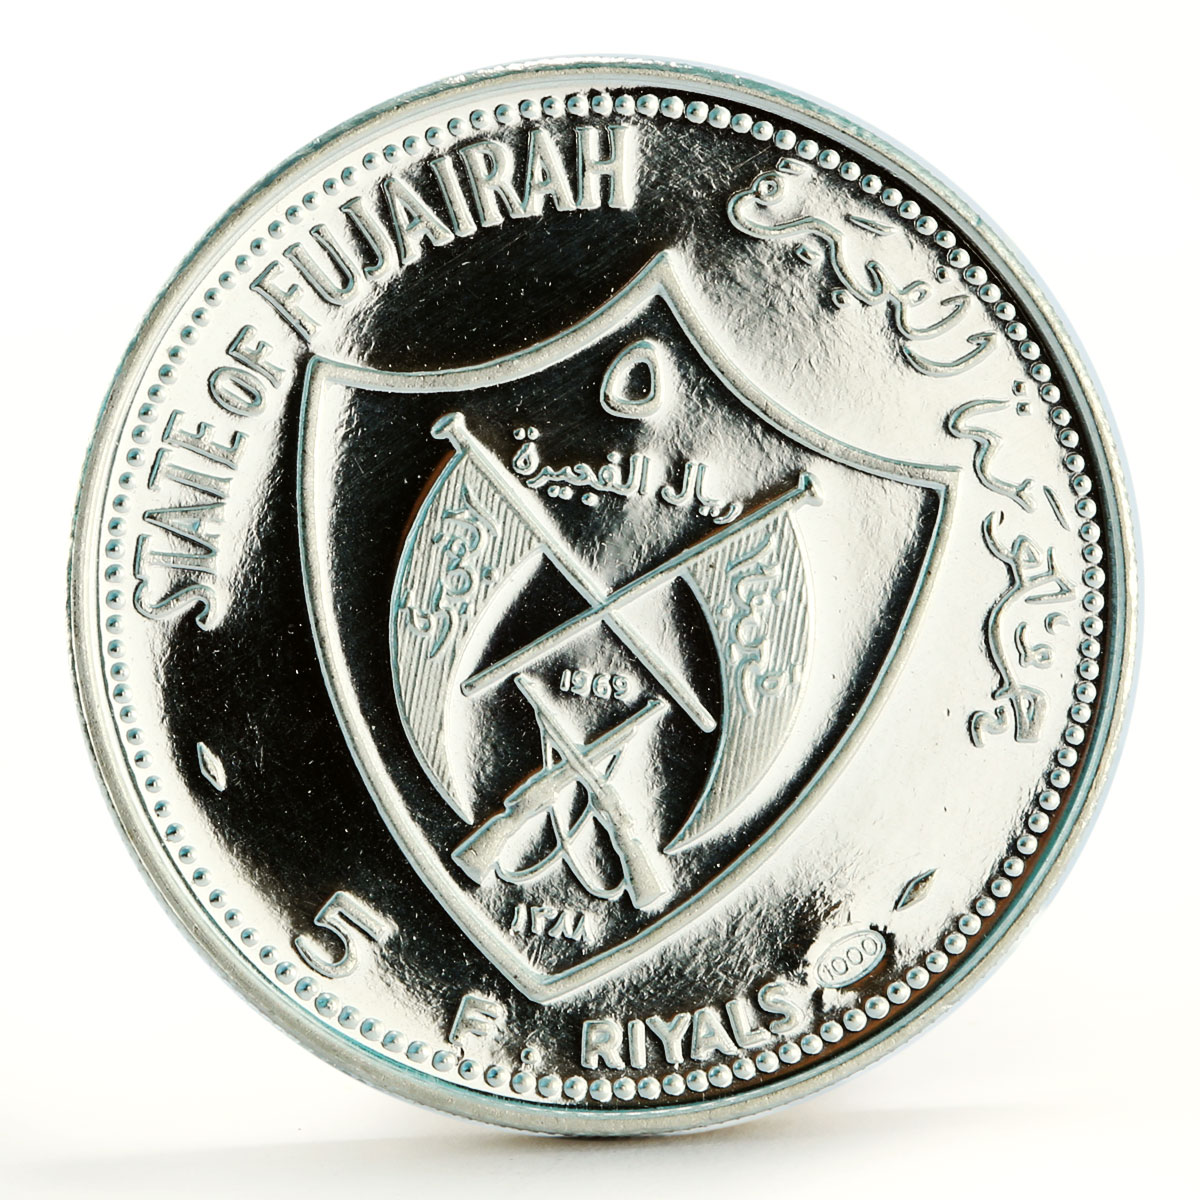 Fujairah 5 riyals Munchen Summer Olympic Games proof silver coin 1969